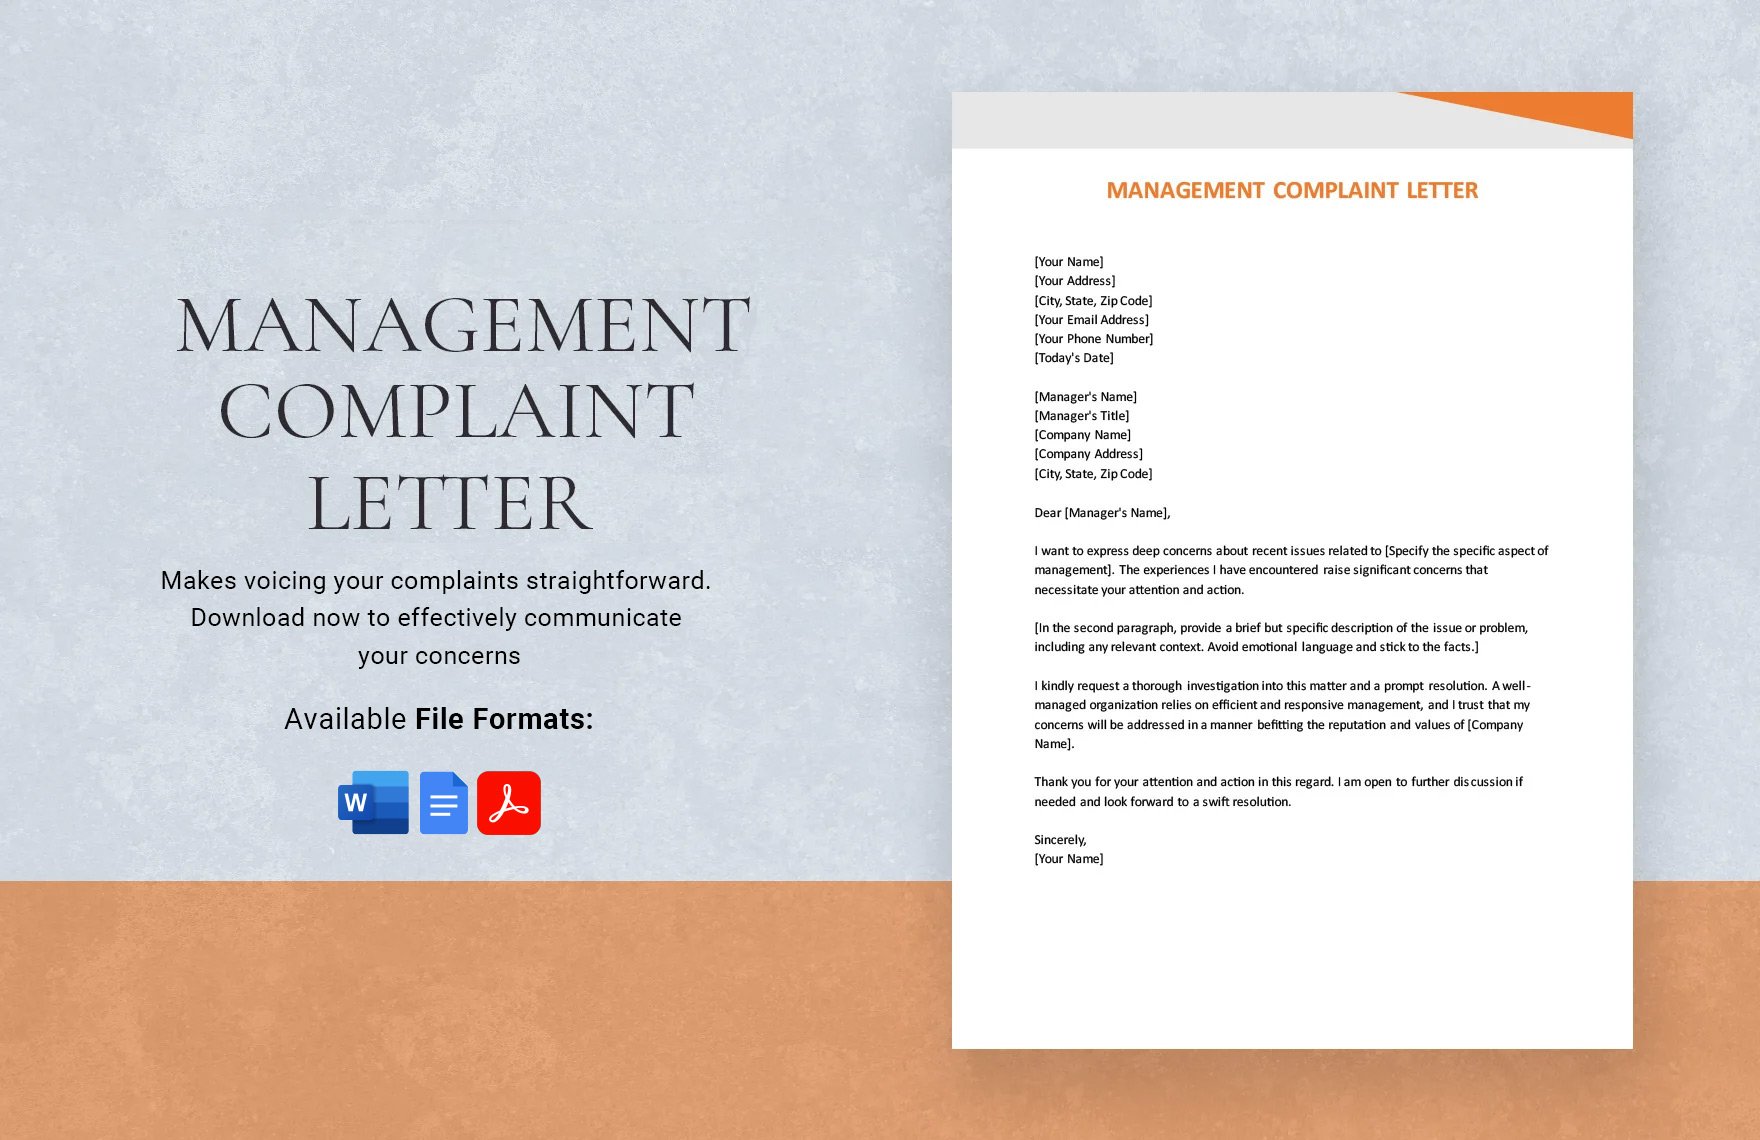 Management Complaint Letter in Word, Google Docs, PDF